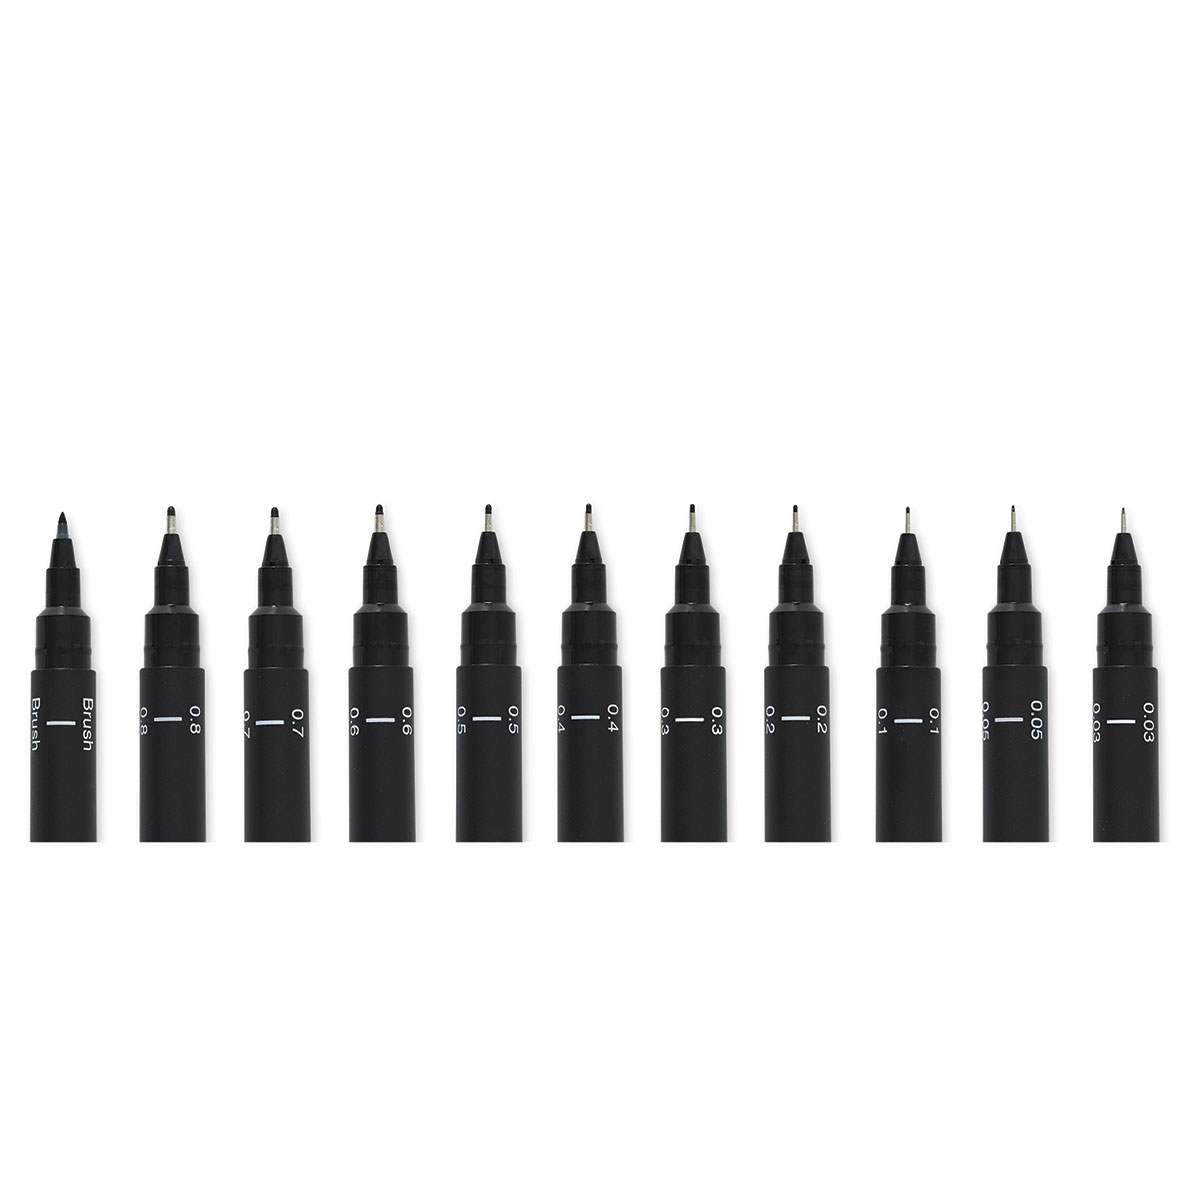 Uni Pin Fineliner Drawing Pen - Complete Set of 11 Grades - Black